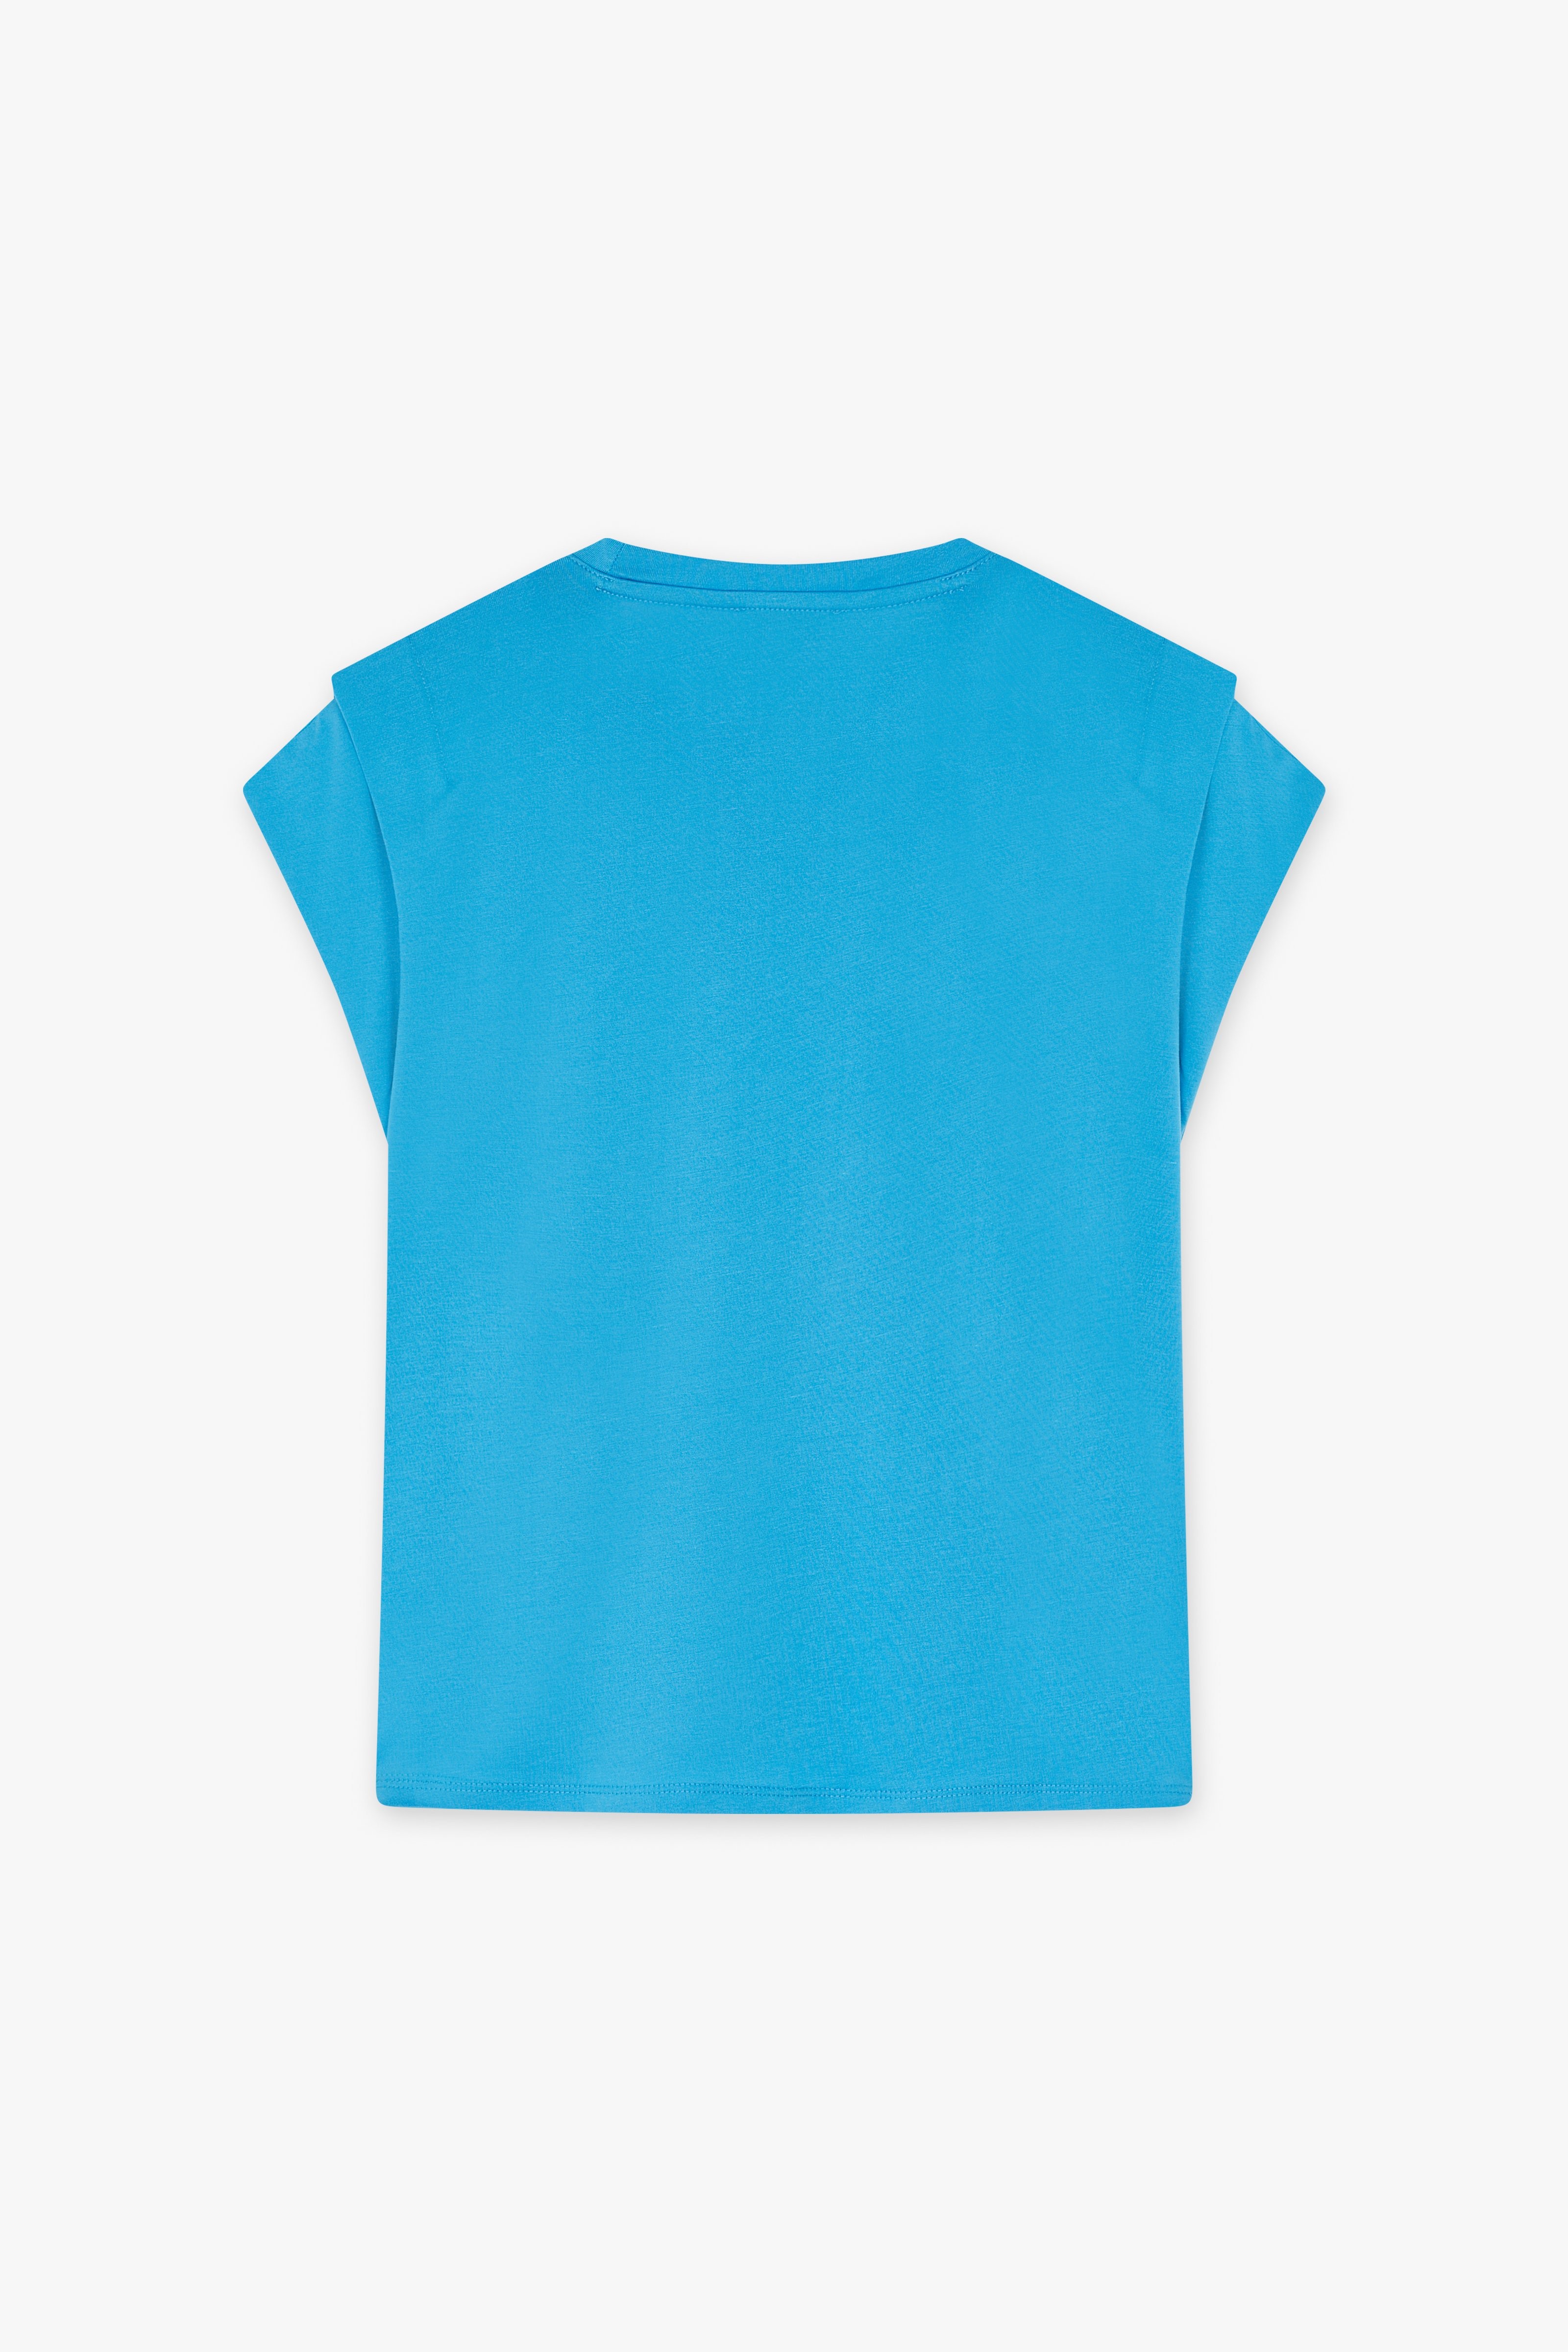 CKS Dames - PAMINA - t-shirt korte mouwen - felblauw